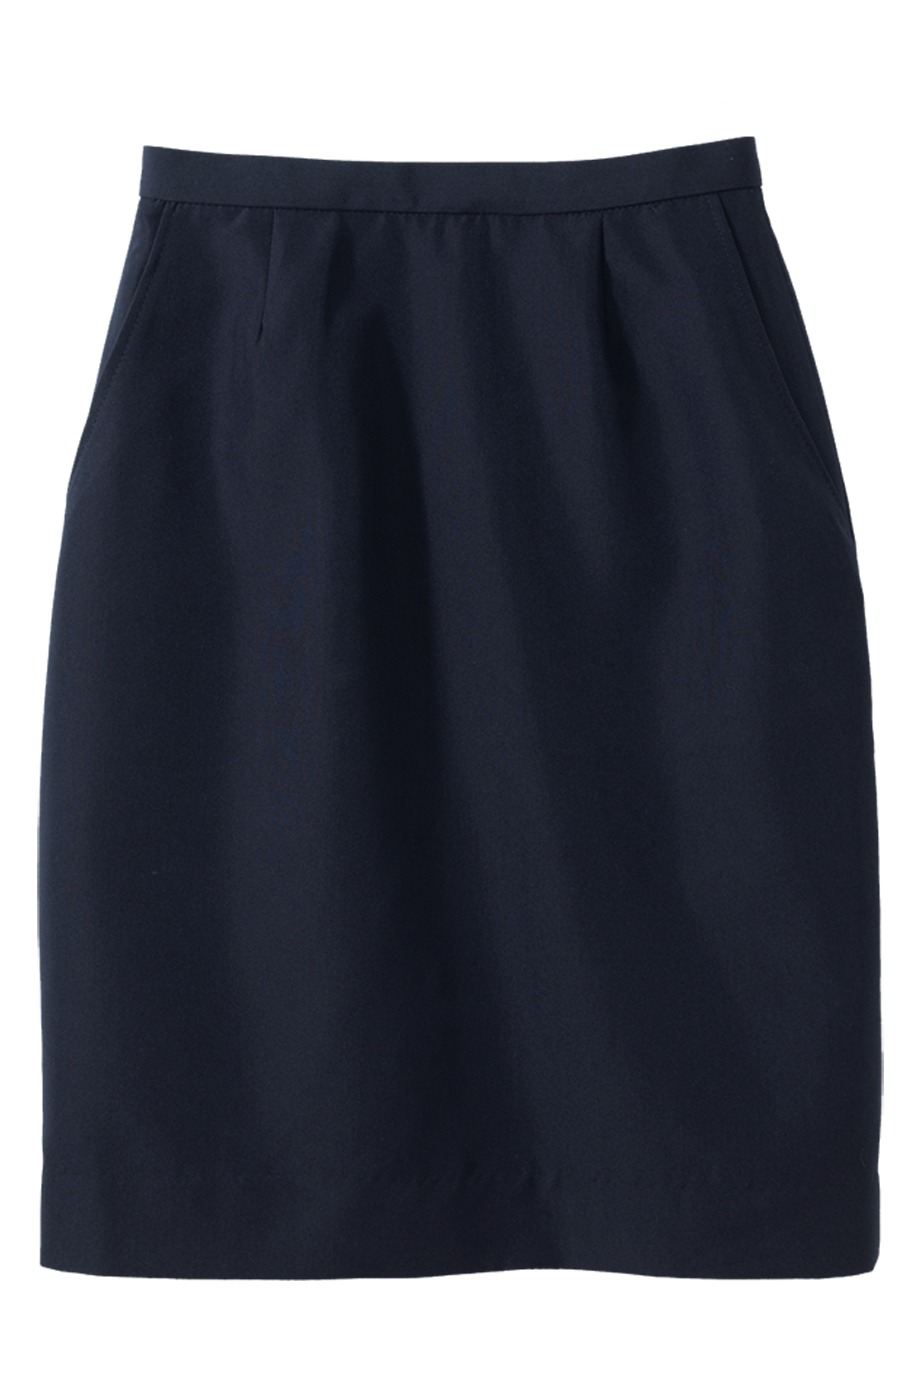 Edwards Garment 9721 - Women's Wshable Wool Blend Skirt